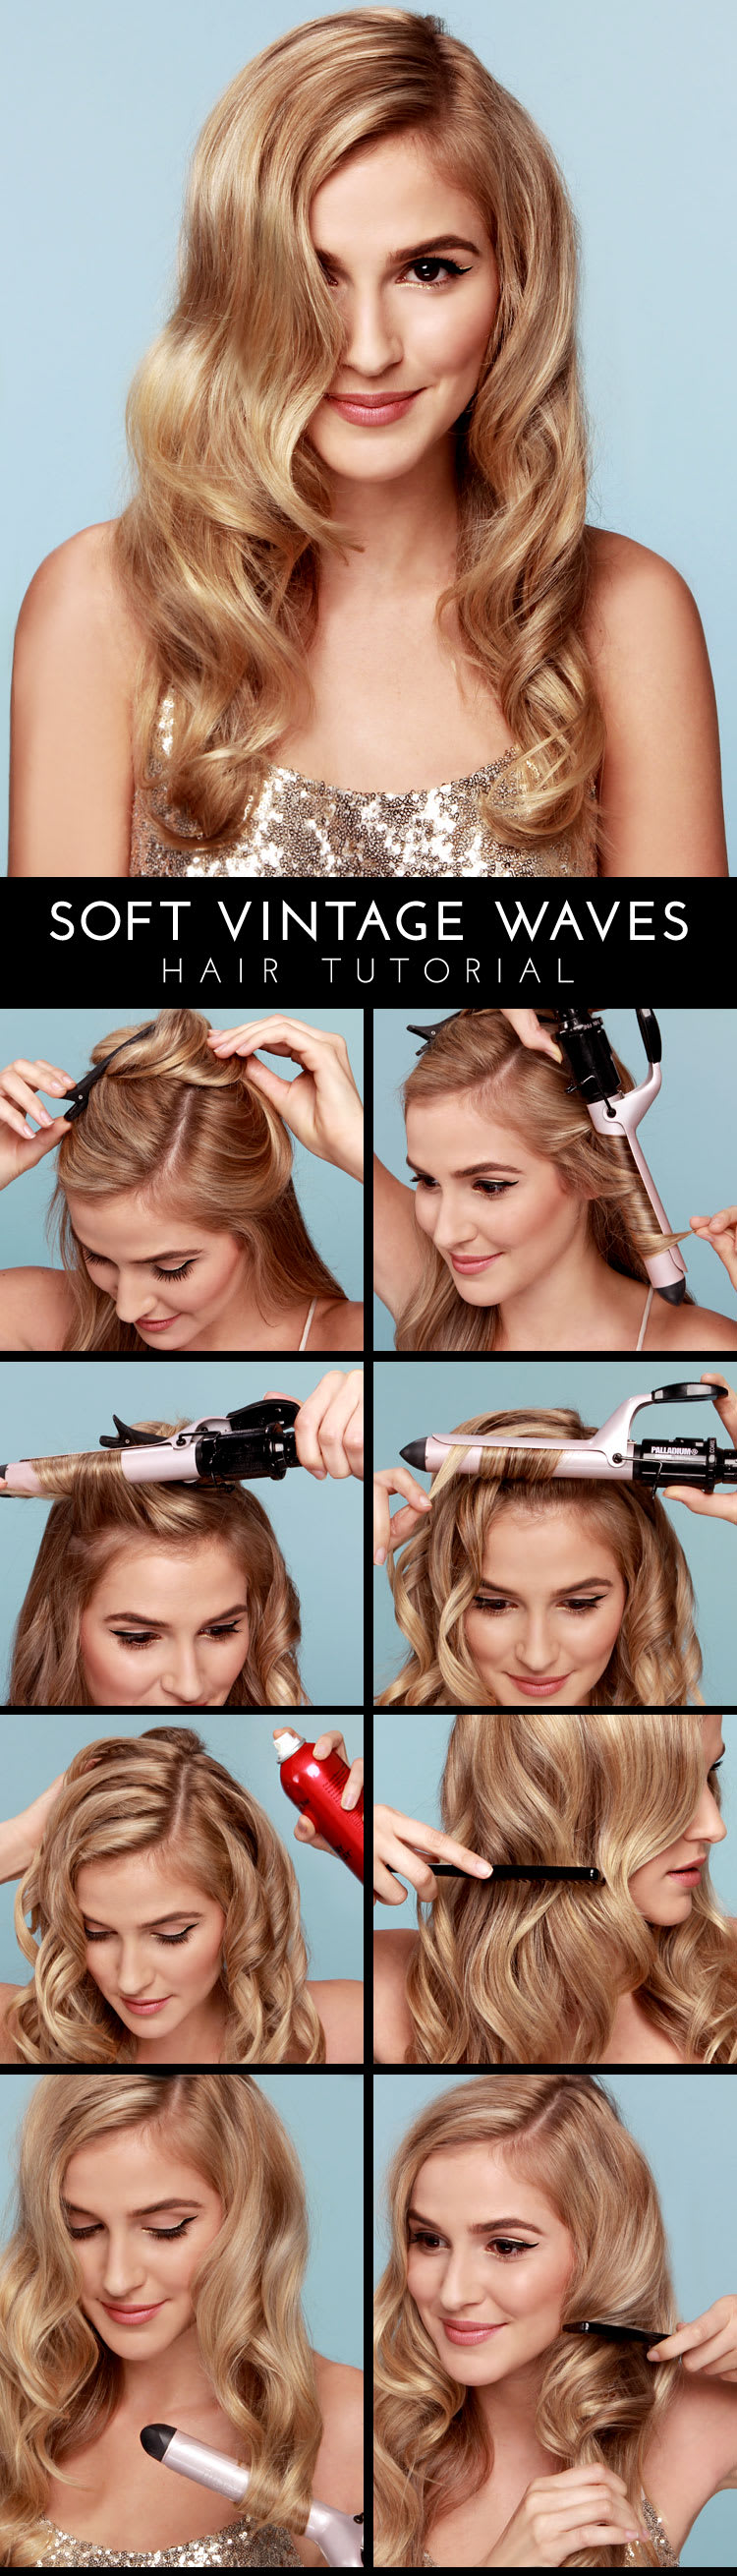 Lulus How-To: Soft Vintage Waves Hair Tutorial | Lulus Blog